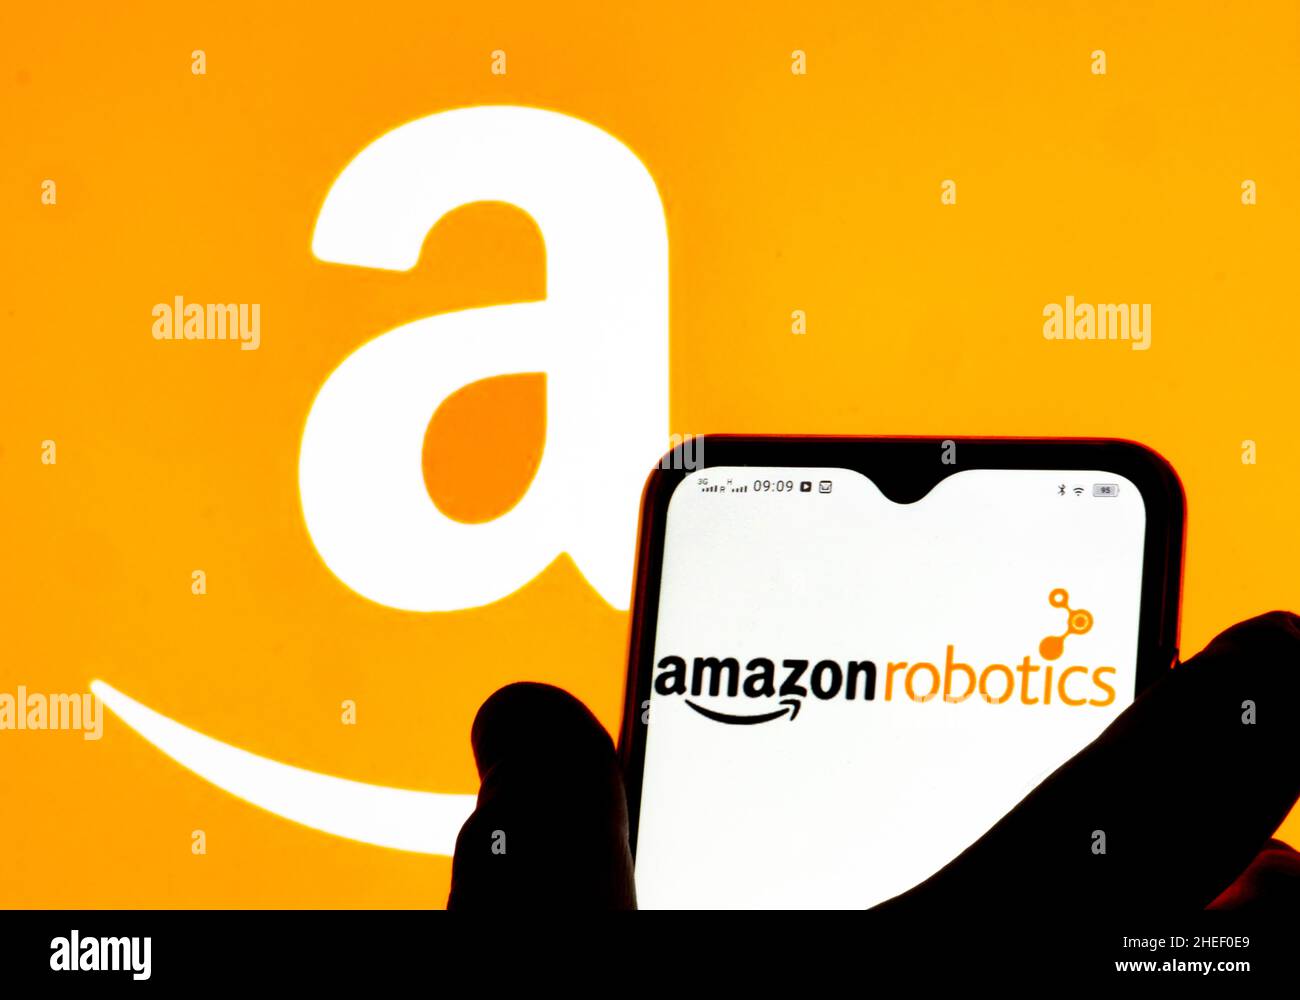 Amazon robotics logo hi-res stock photography and images - Alamy